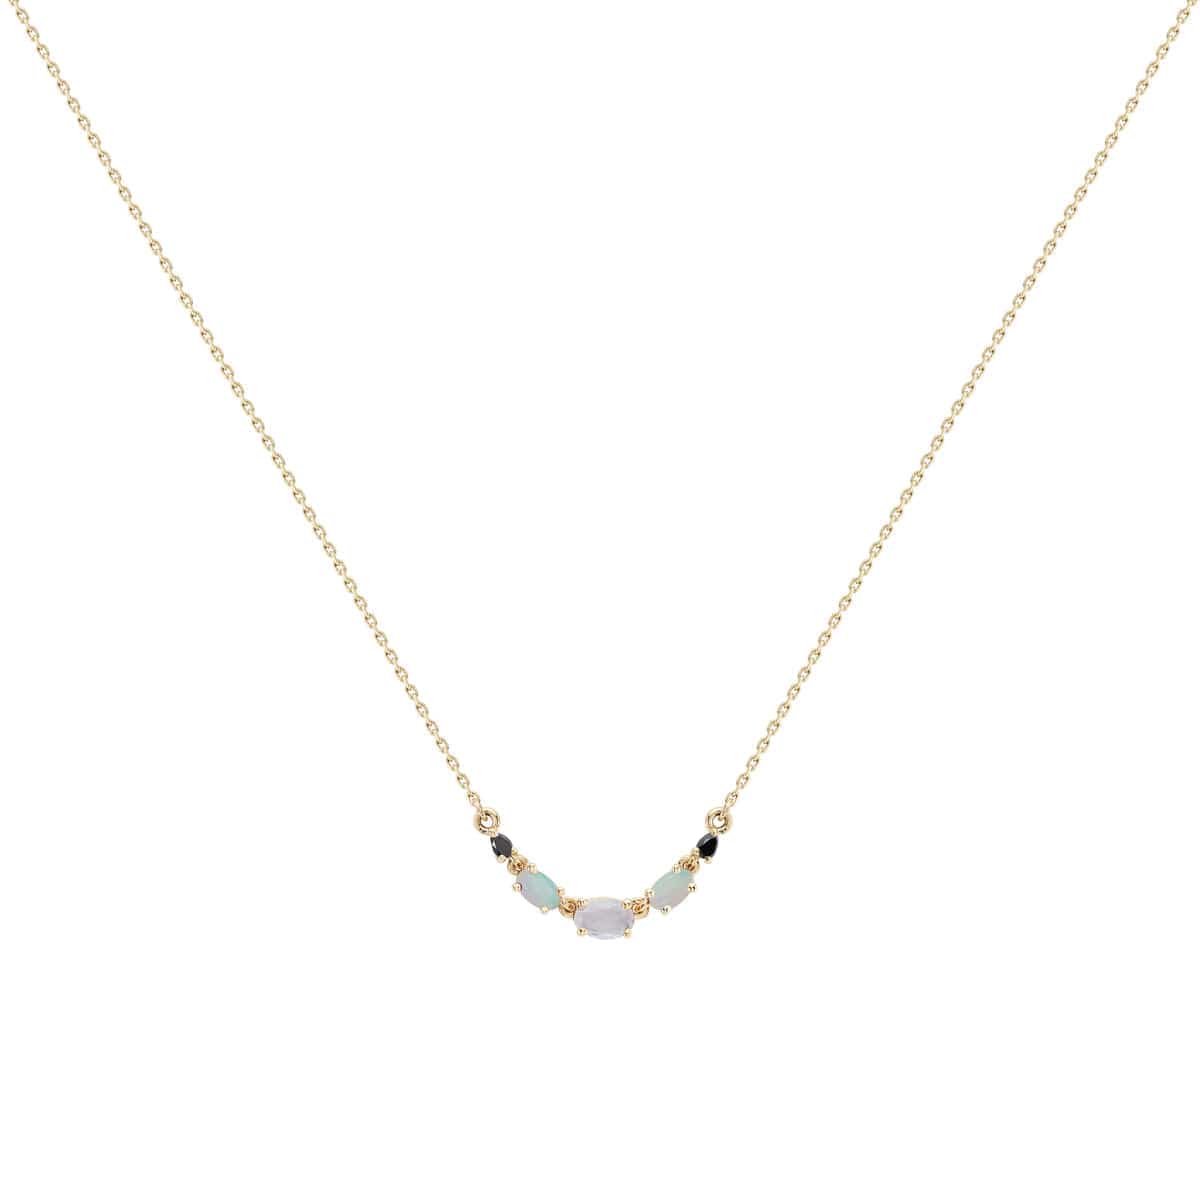 NKL-9K 9k Yellow Gold Multi Gemstone Claw Set Necklace -